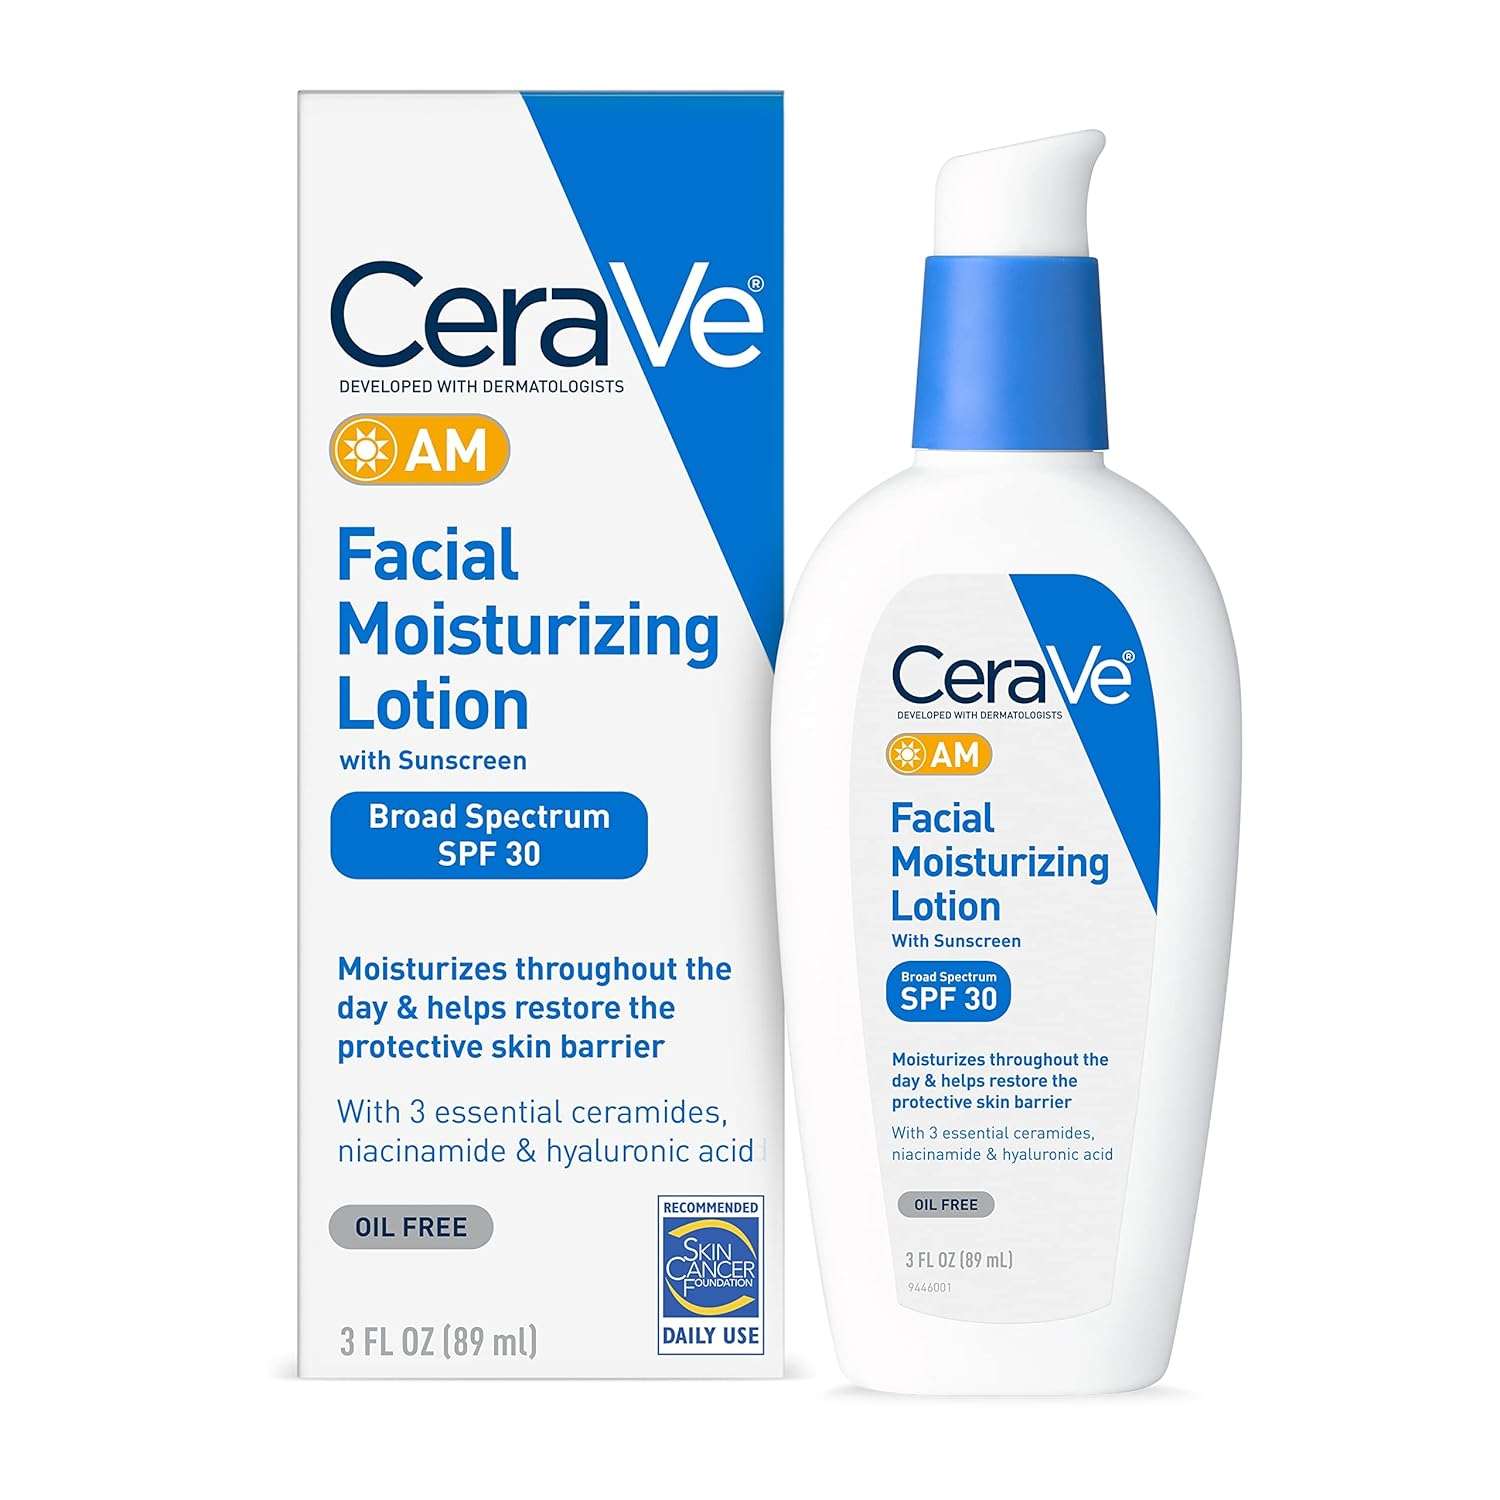 CeraVe AM Facial Moisturizing Lotion SPF 30 Review